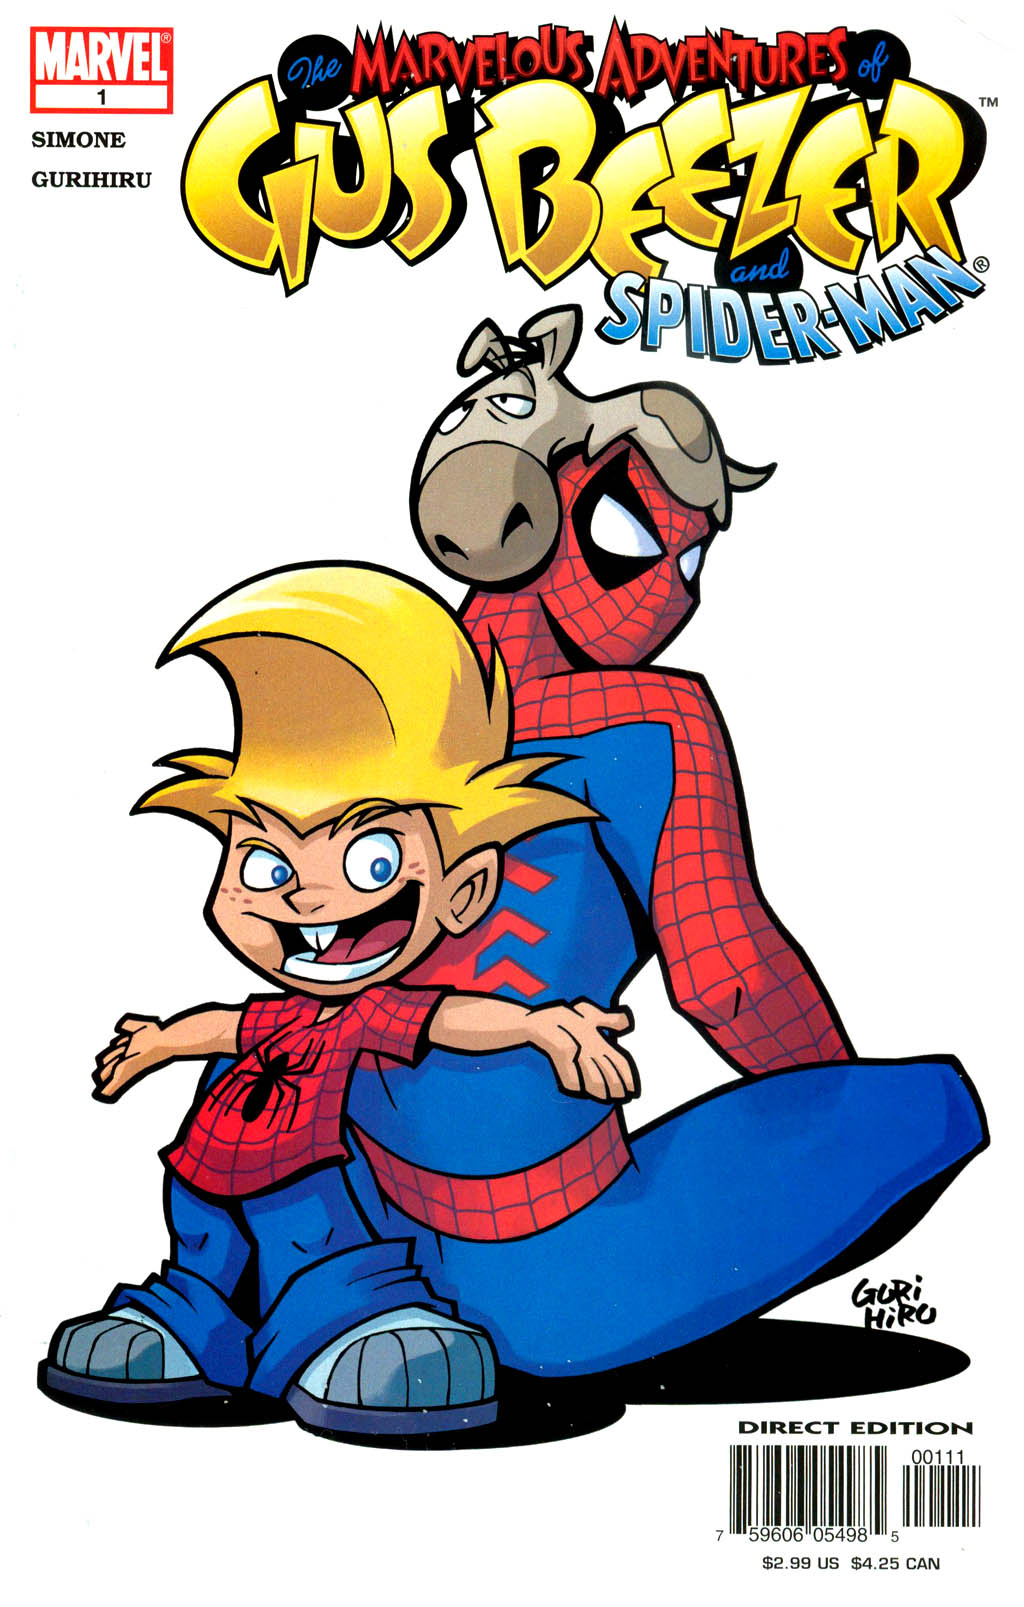 Read online Marvelous Adventures of Gus Beezer comic -  Issue # Gus Beezer and Spider-Man - 1